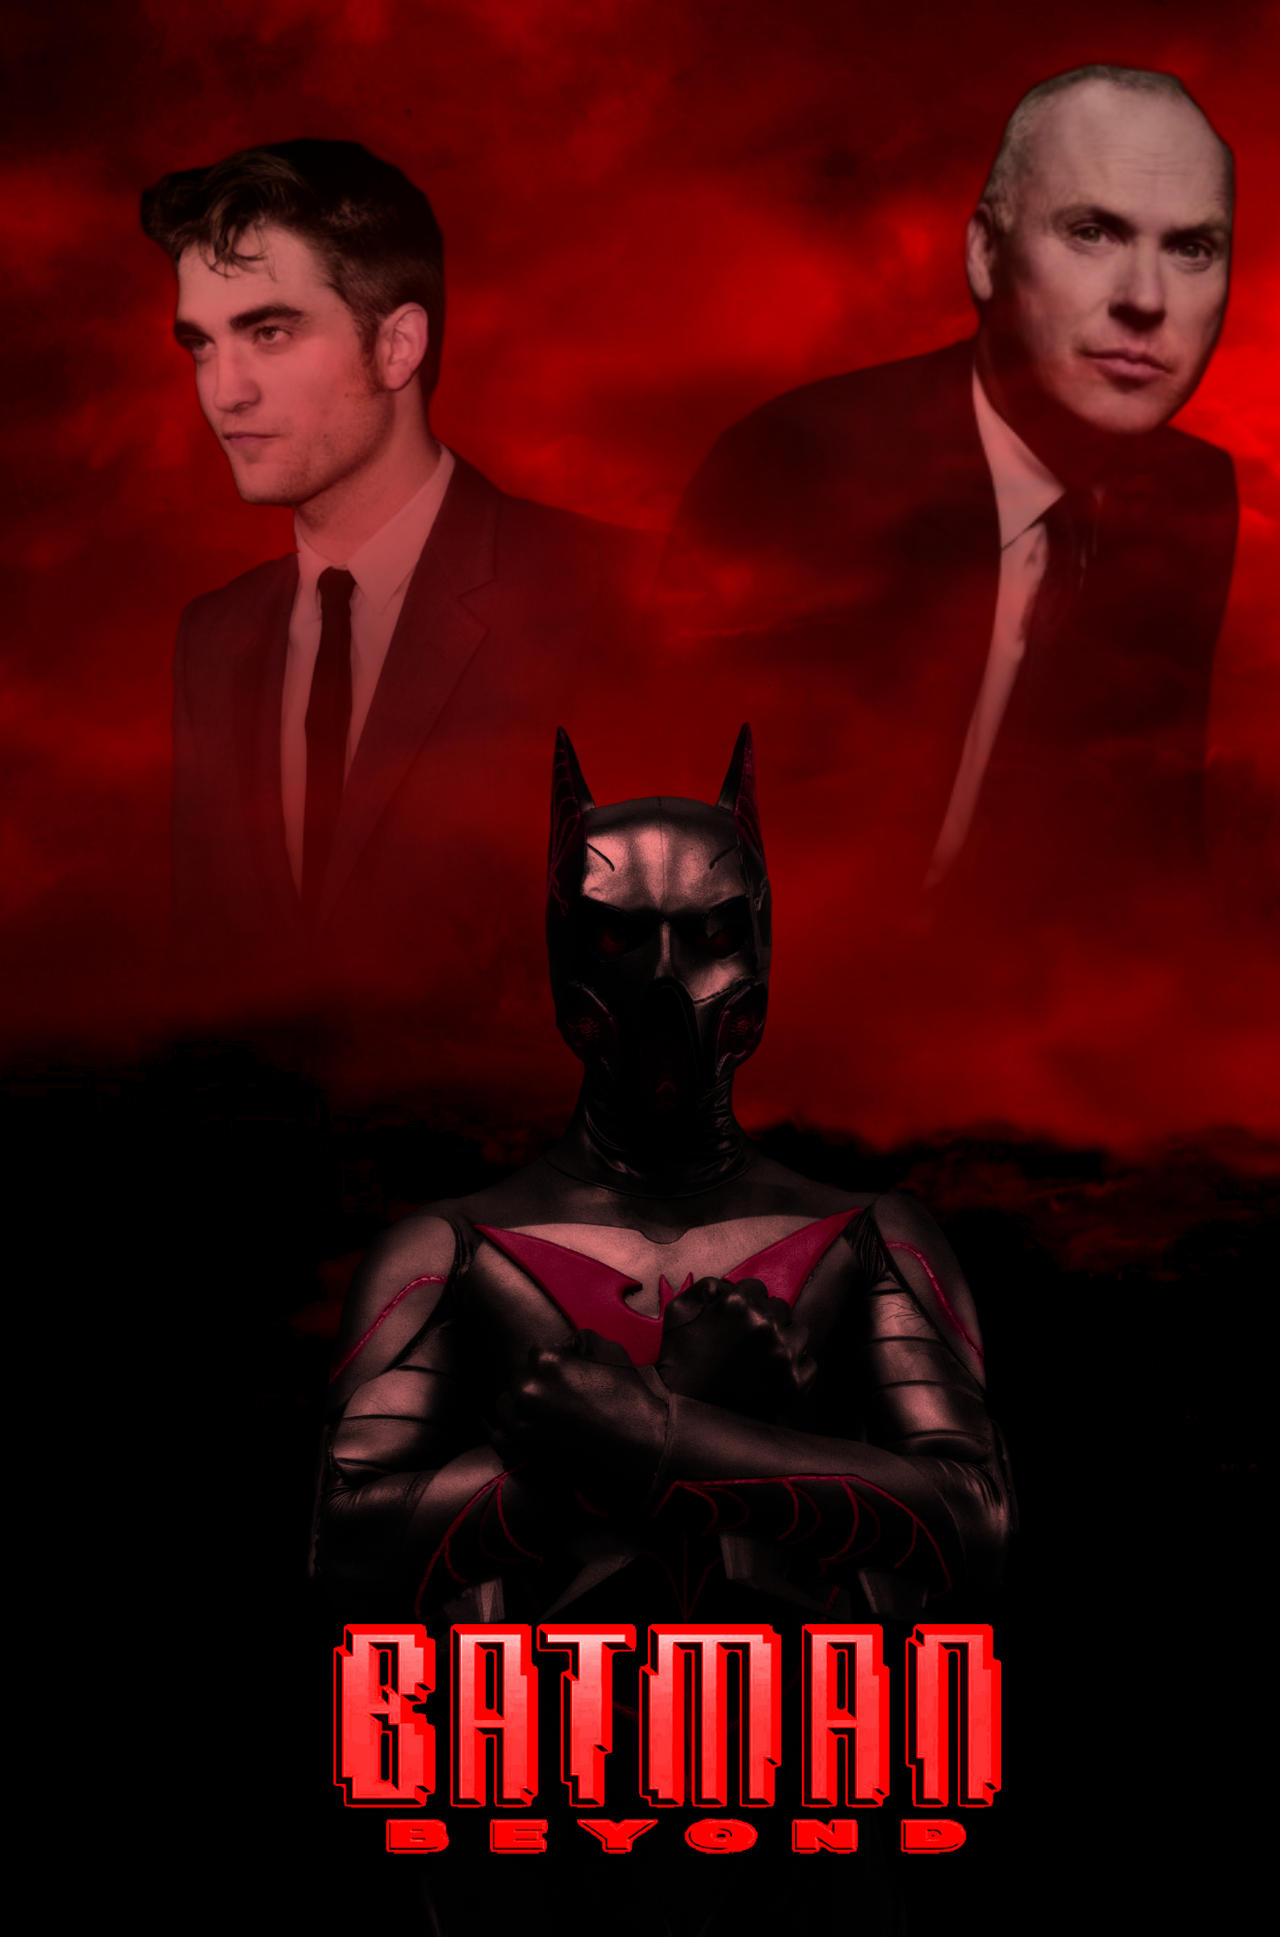 Batman Beyond - Poster by Asthonx1 on DeviantArt